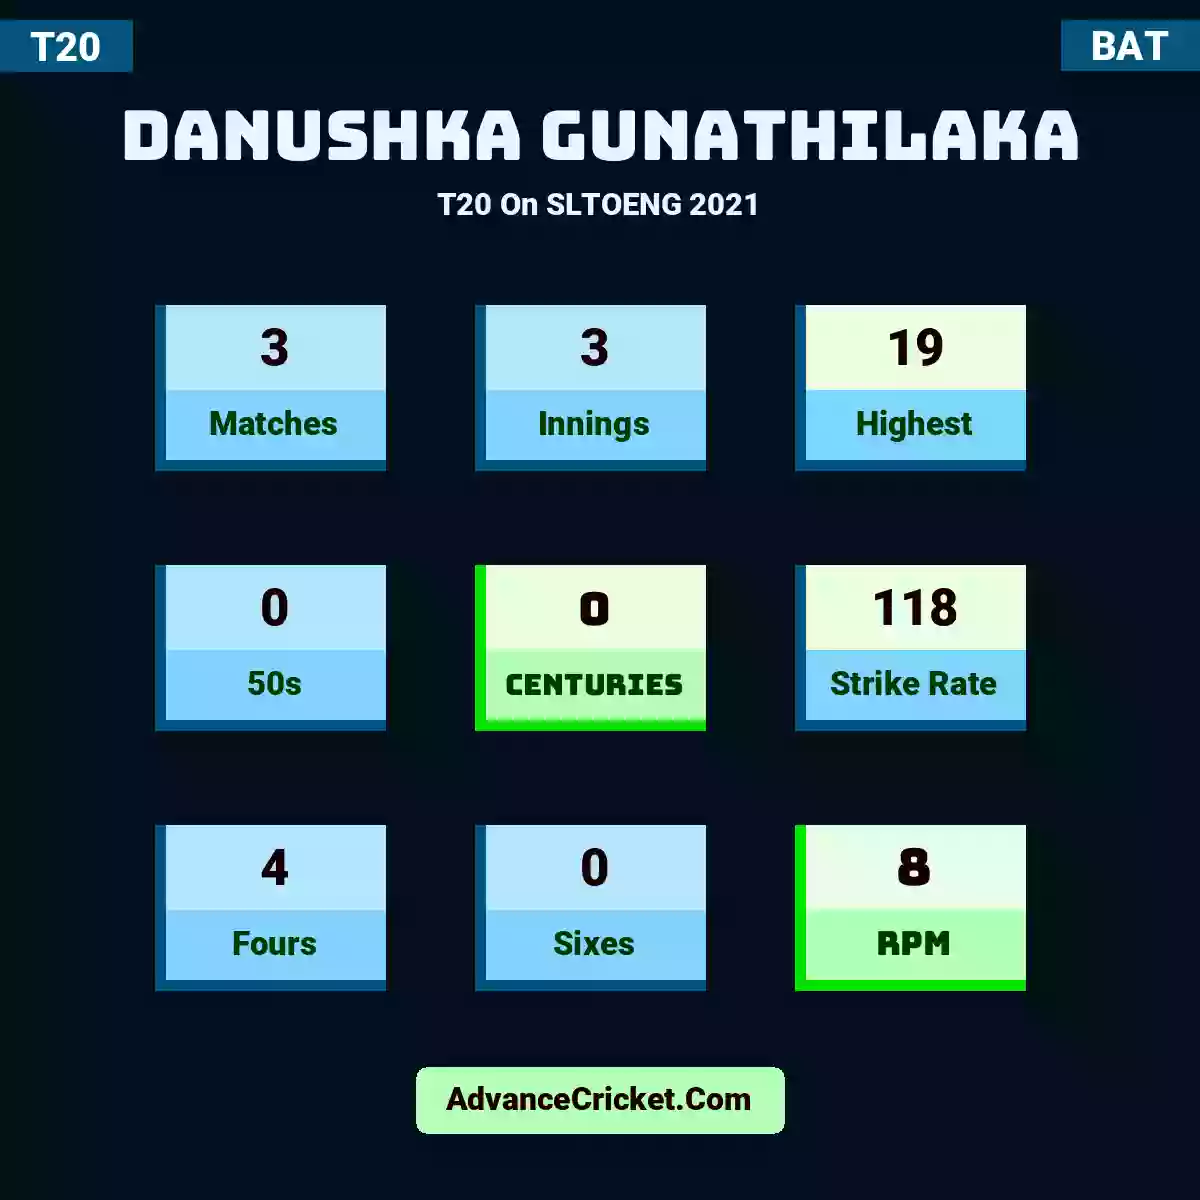 Danushka Gunathilaka T20  On SLTOENG 2021, Danushka Gunathilaka played 3 matches, scored 19 runs as highest, 0 half-centuries, and 0 centuries, with a strike rate of 118. D.Gunathilaka hit 4 fours and 0 sixes, with an RPM of 8.